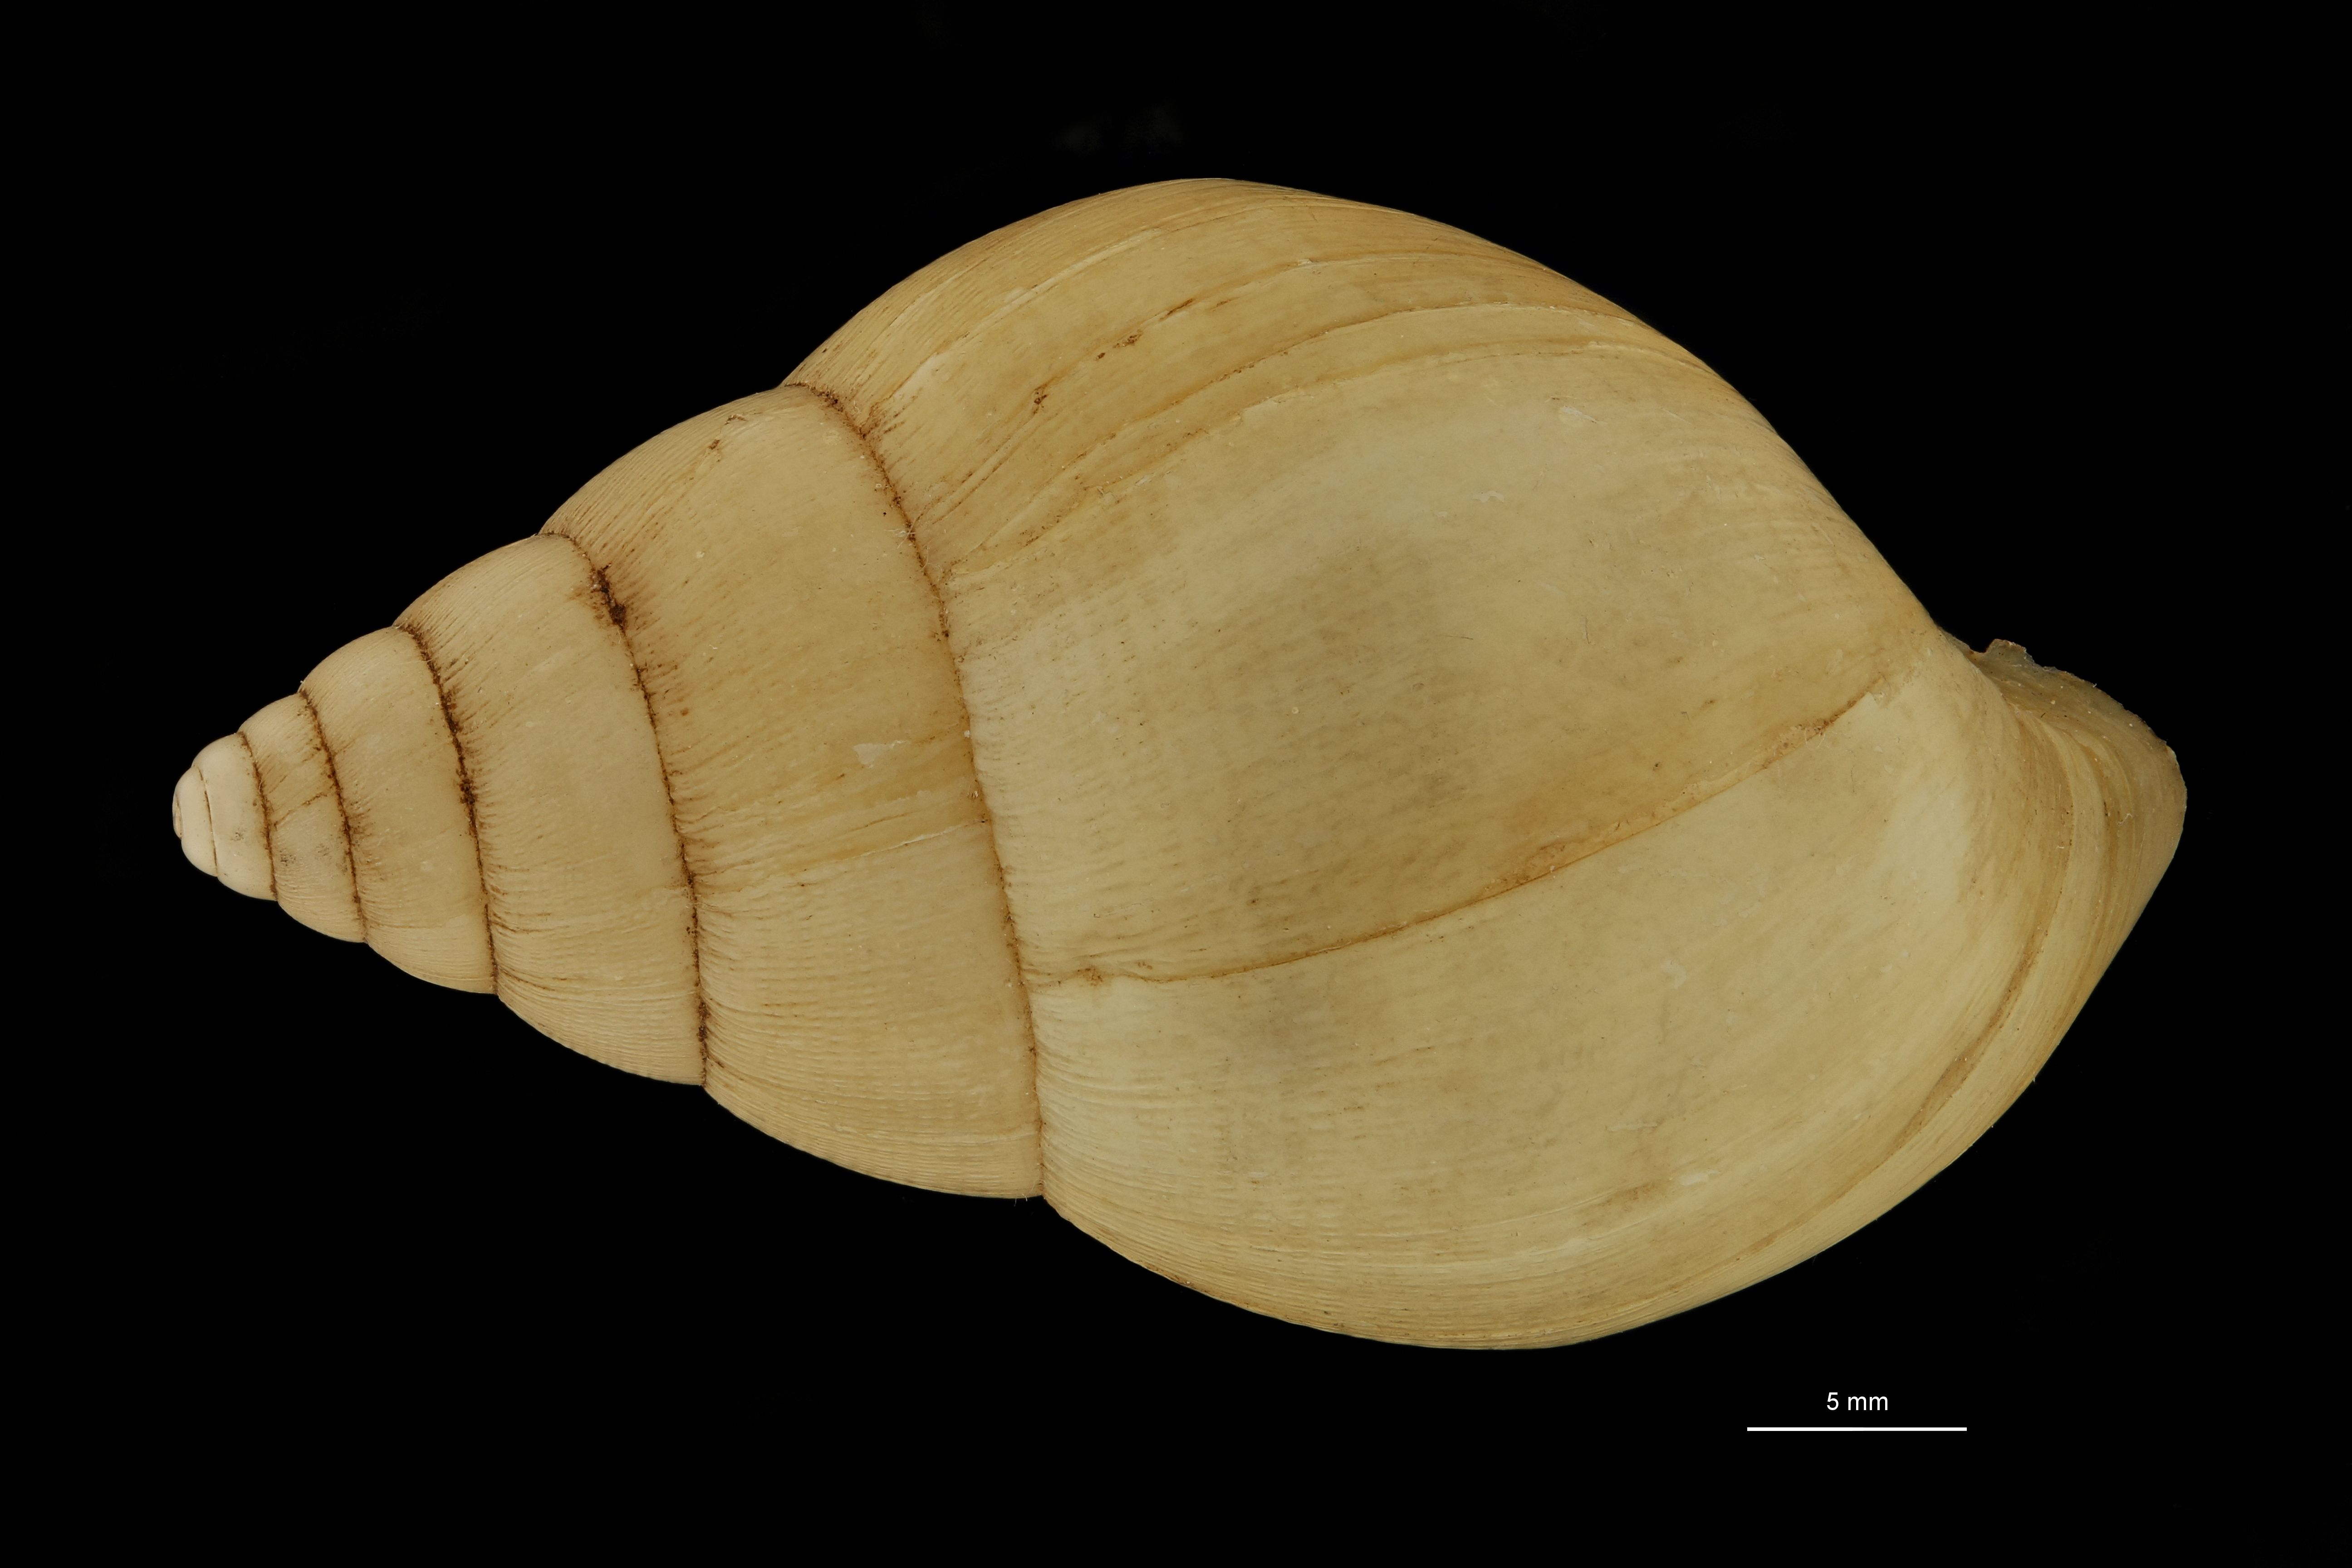 BE-RBINS-INV SYNTYPE MT.3674 Limicolaria hidalgoi DORSAL.jpg